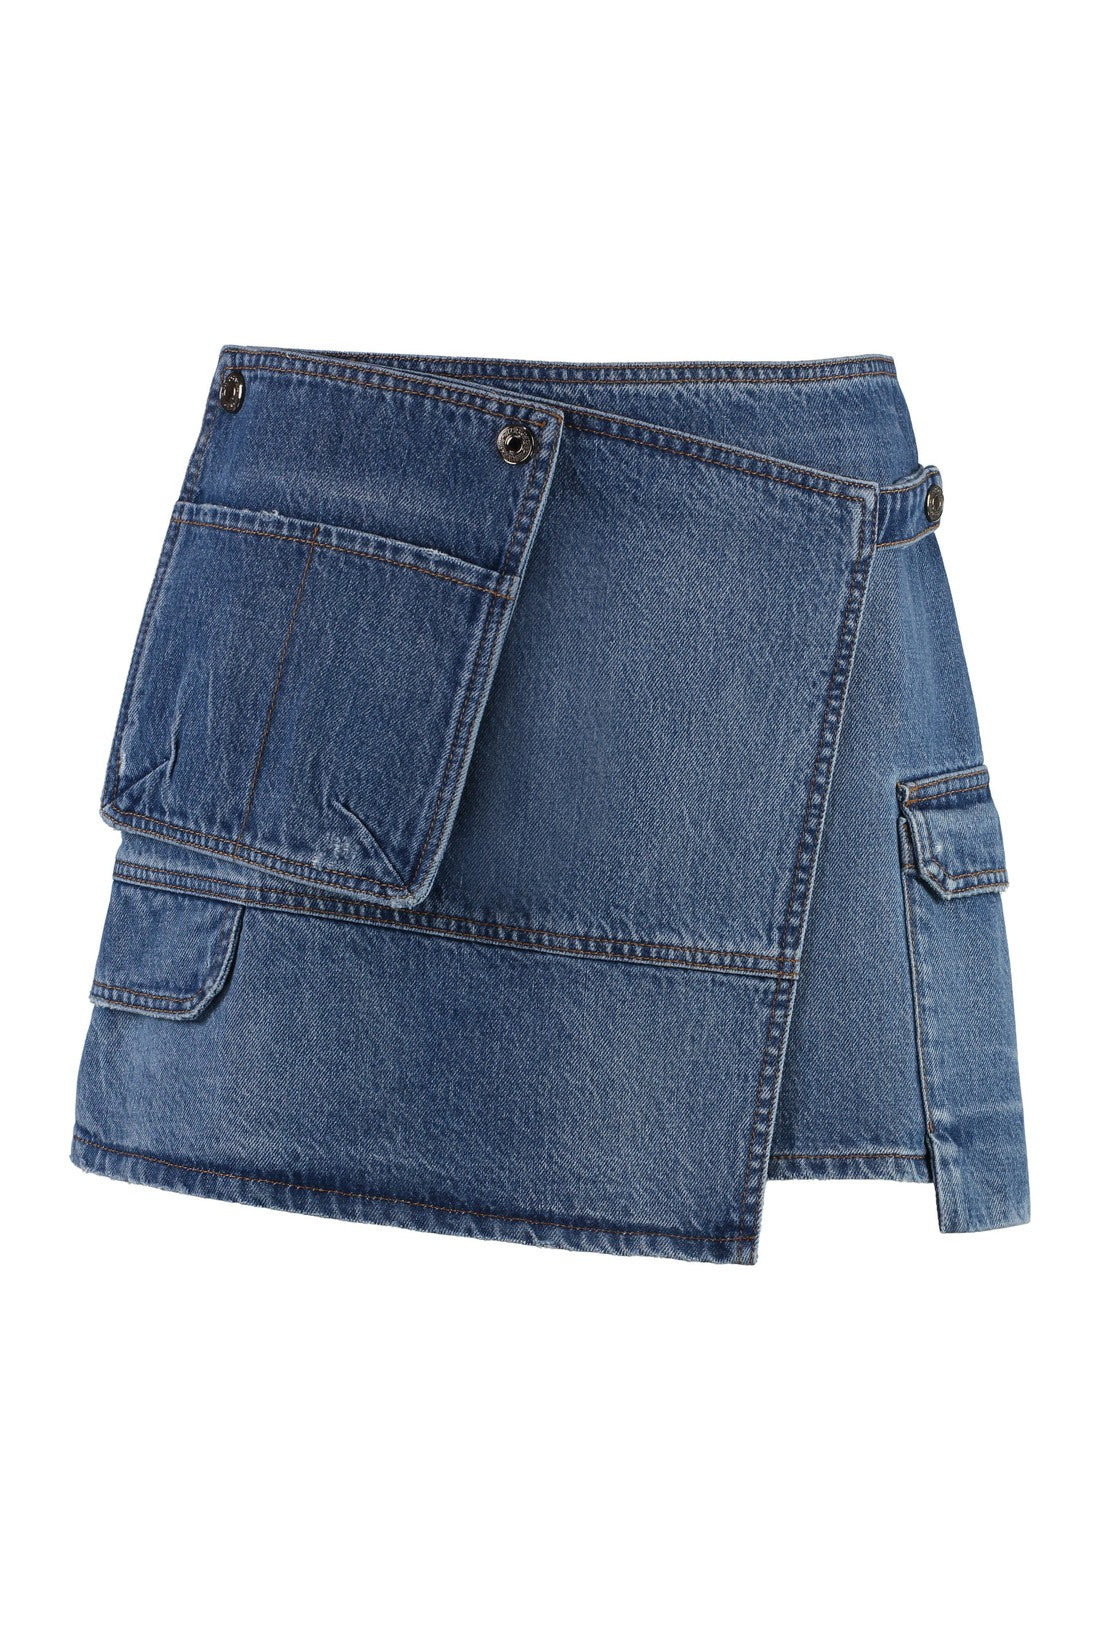 MSGM-OUTLET-SALE-Denim mini skirt-ARCHIVIST